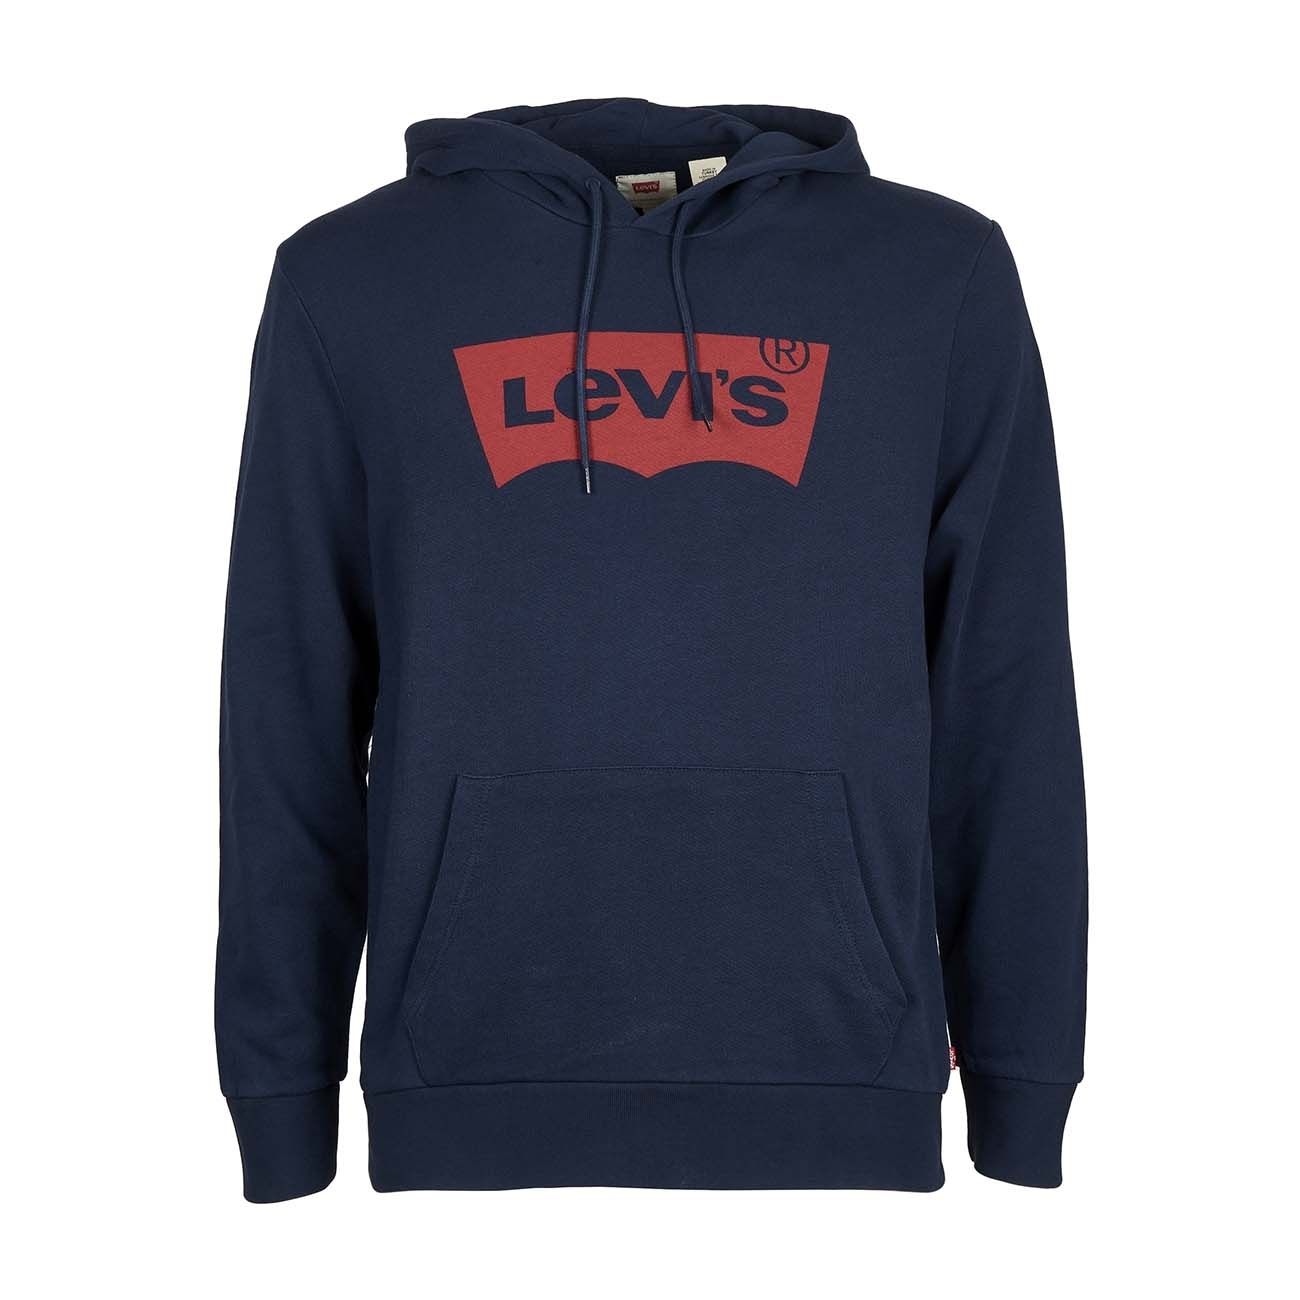 levis hoodie navy